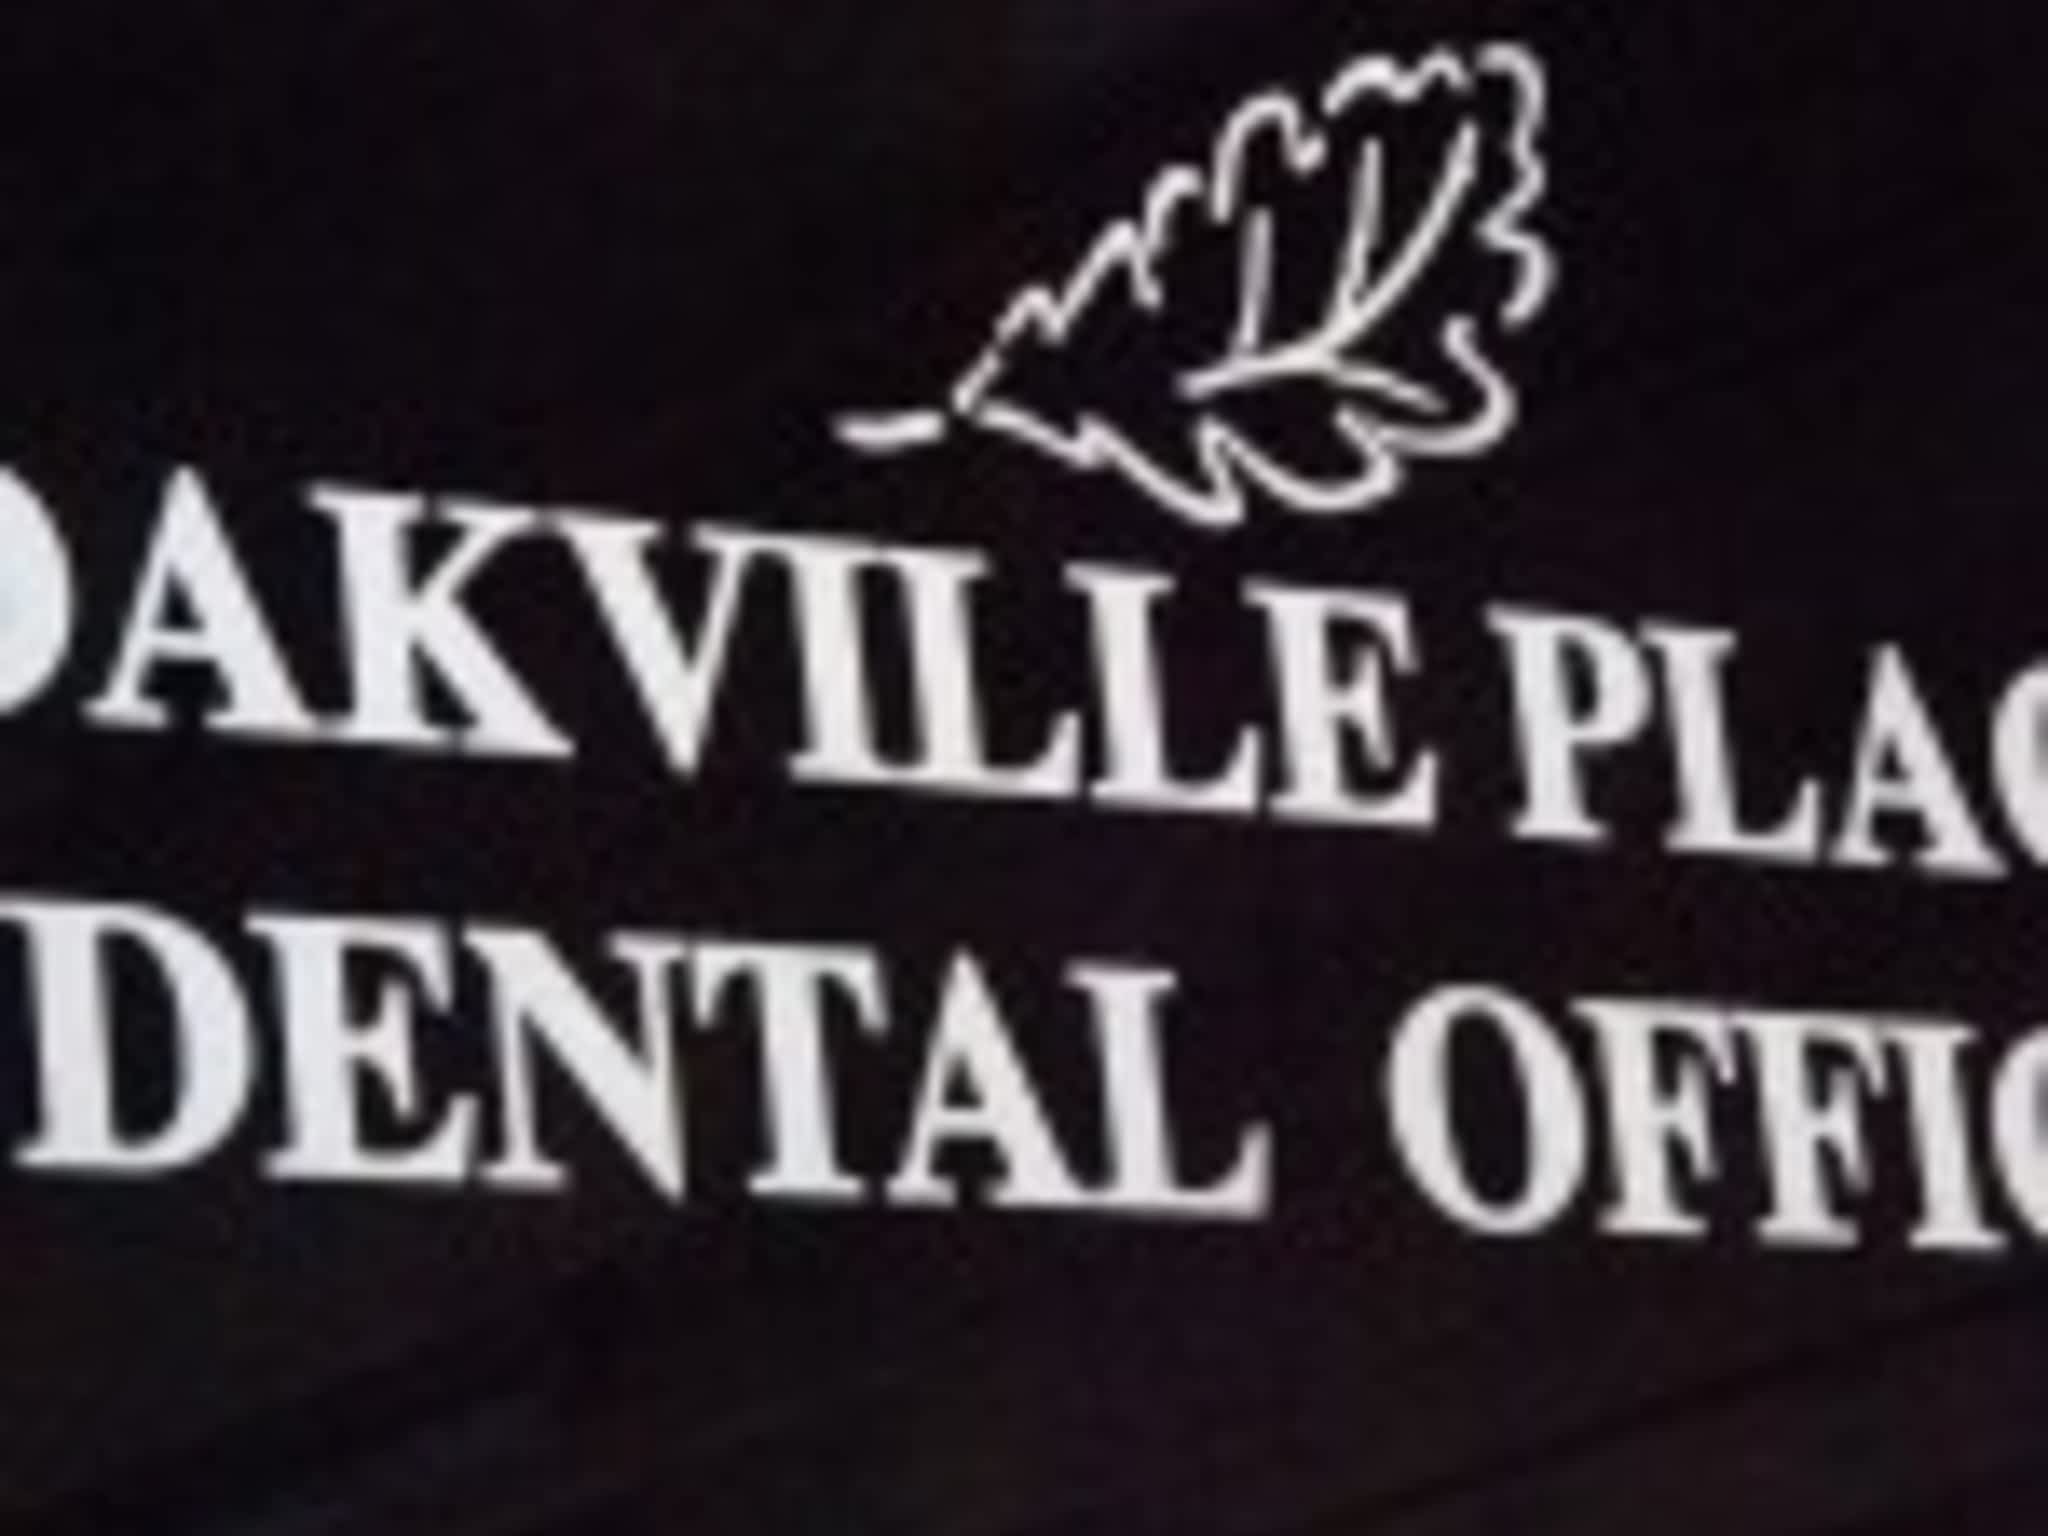 photo Oakville Place Dental Office